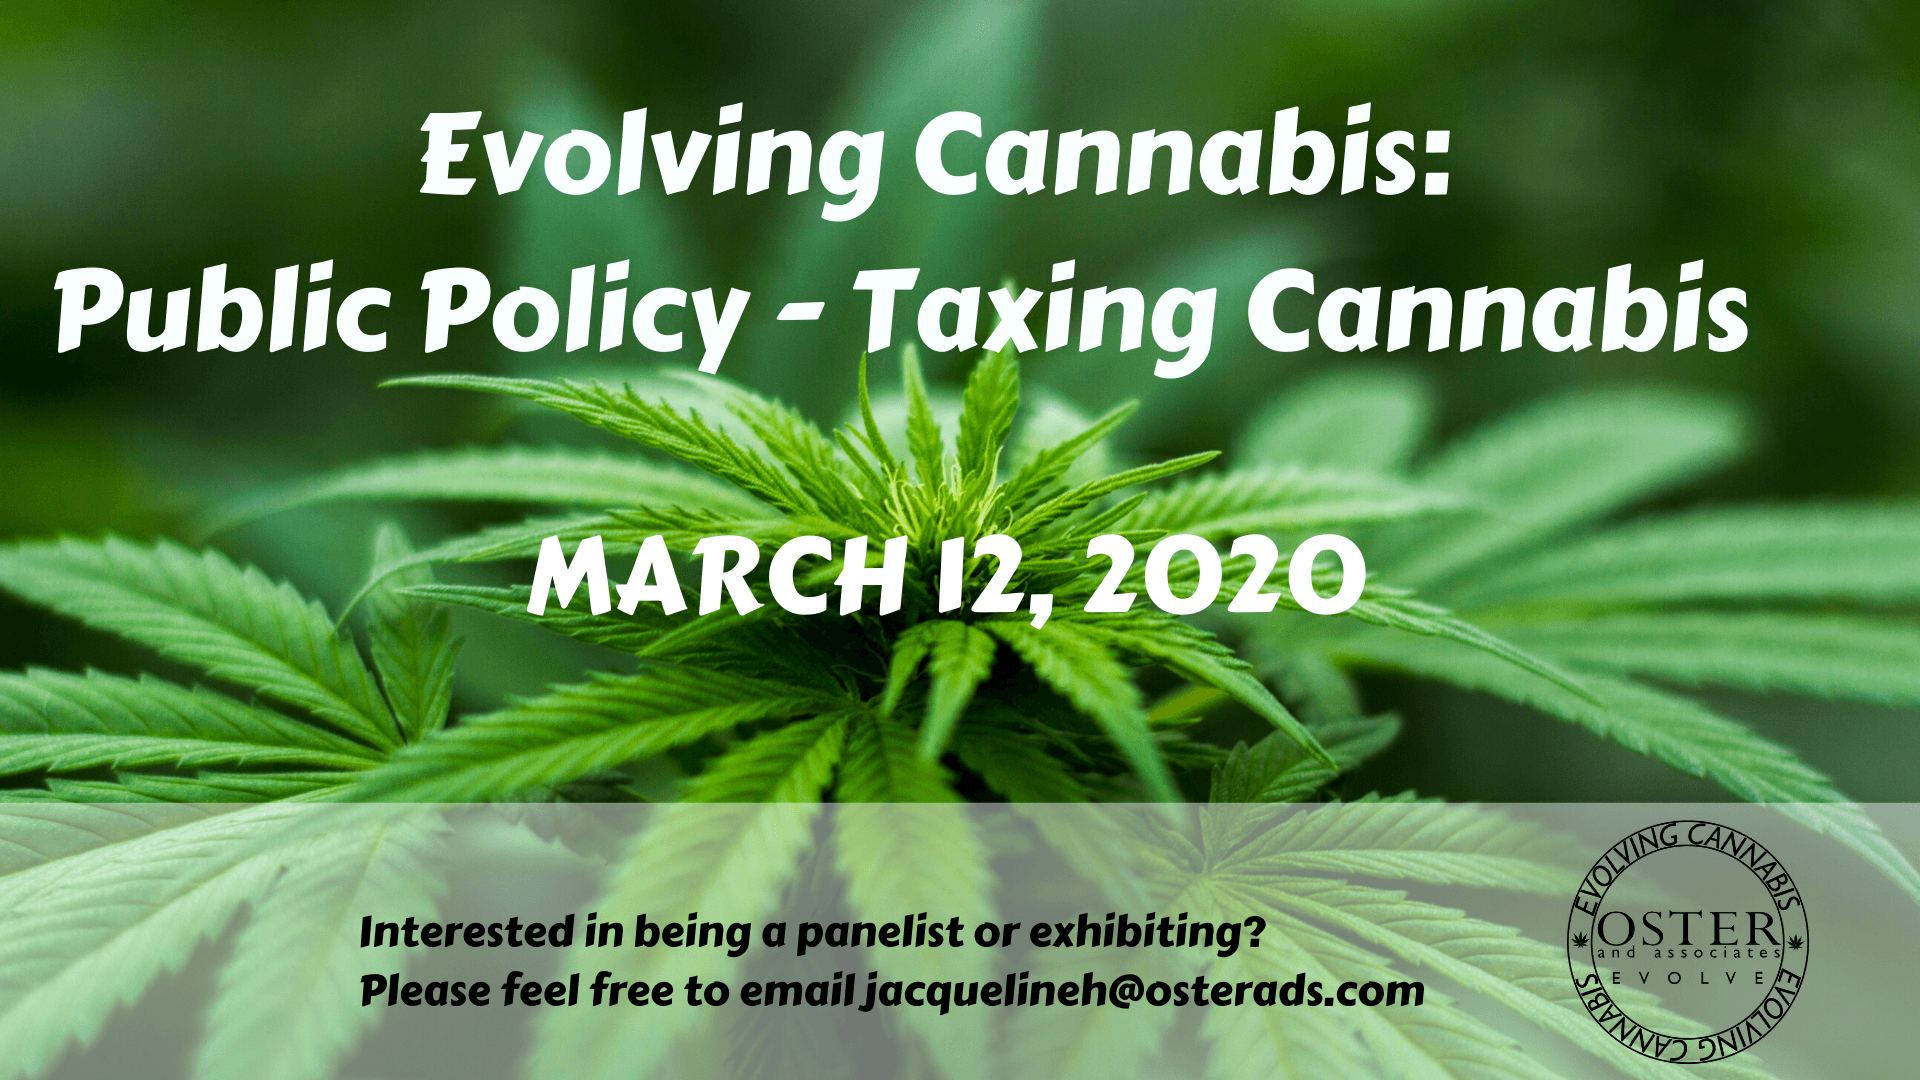 Evolving Cannabis: Public Policy - Taxing Cannabis